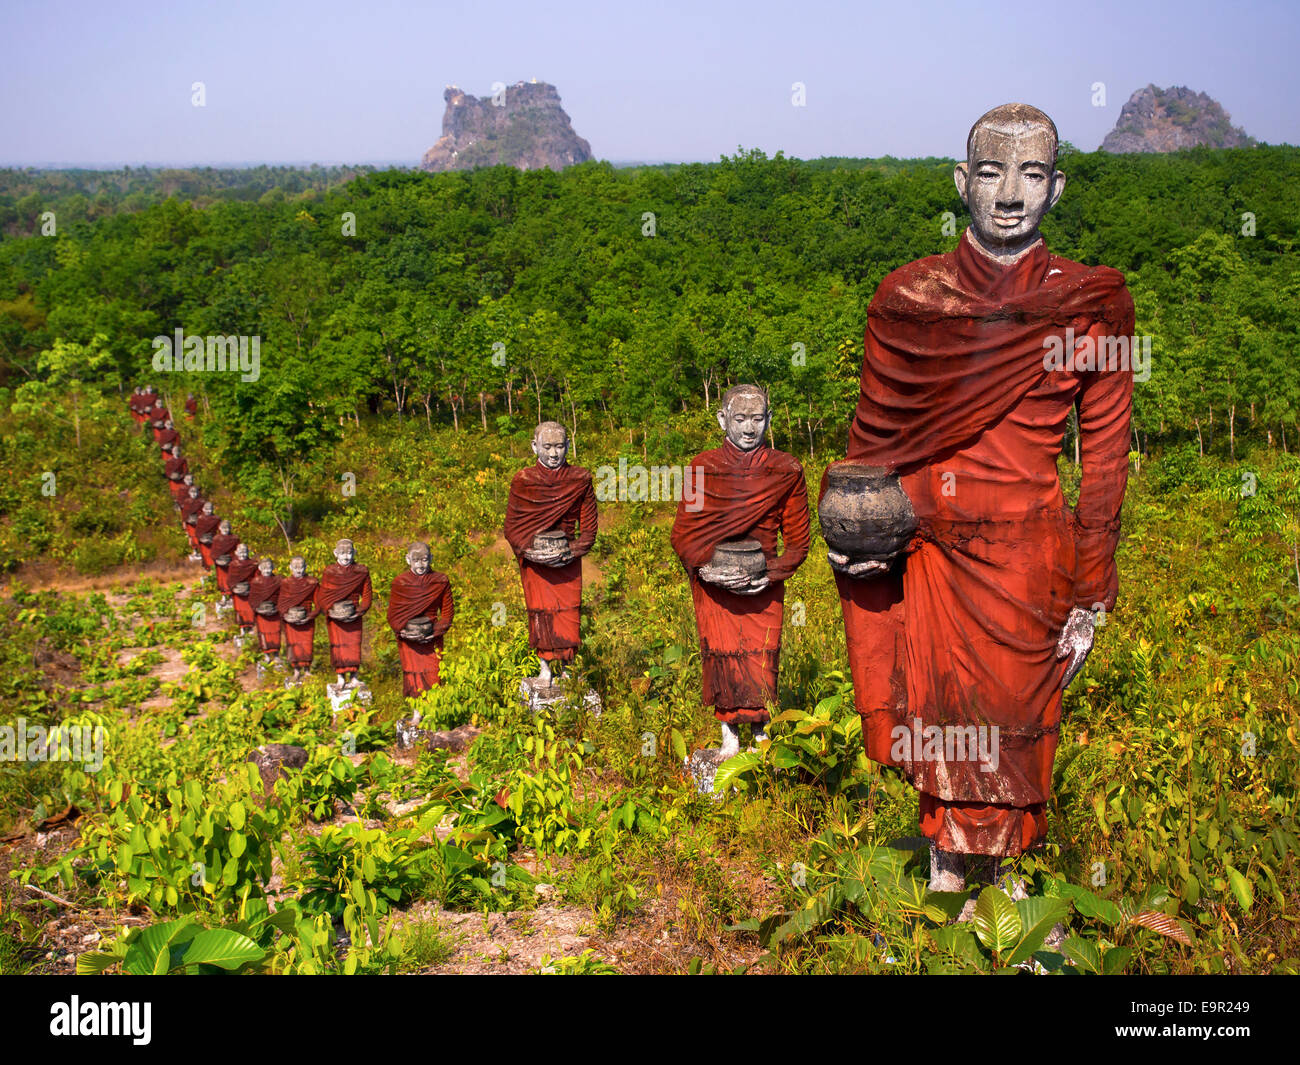 Hundreds of statues of Buddhist monks collecting alms surround the massive Win Sein Taw Ya Buddha in Mawlamyine, Myanmar. Stock Photo